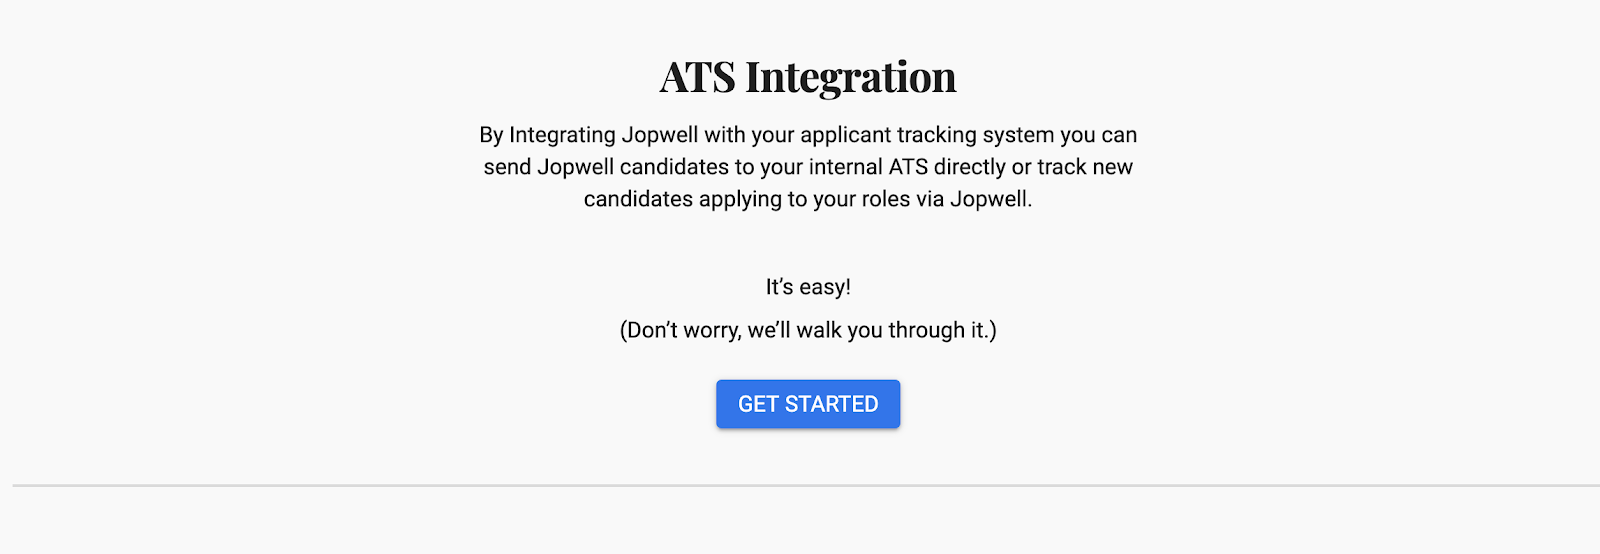 Jopwell integration image